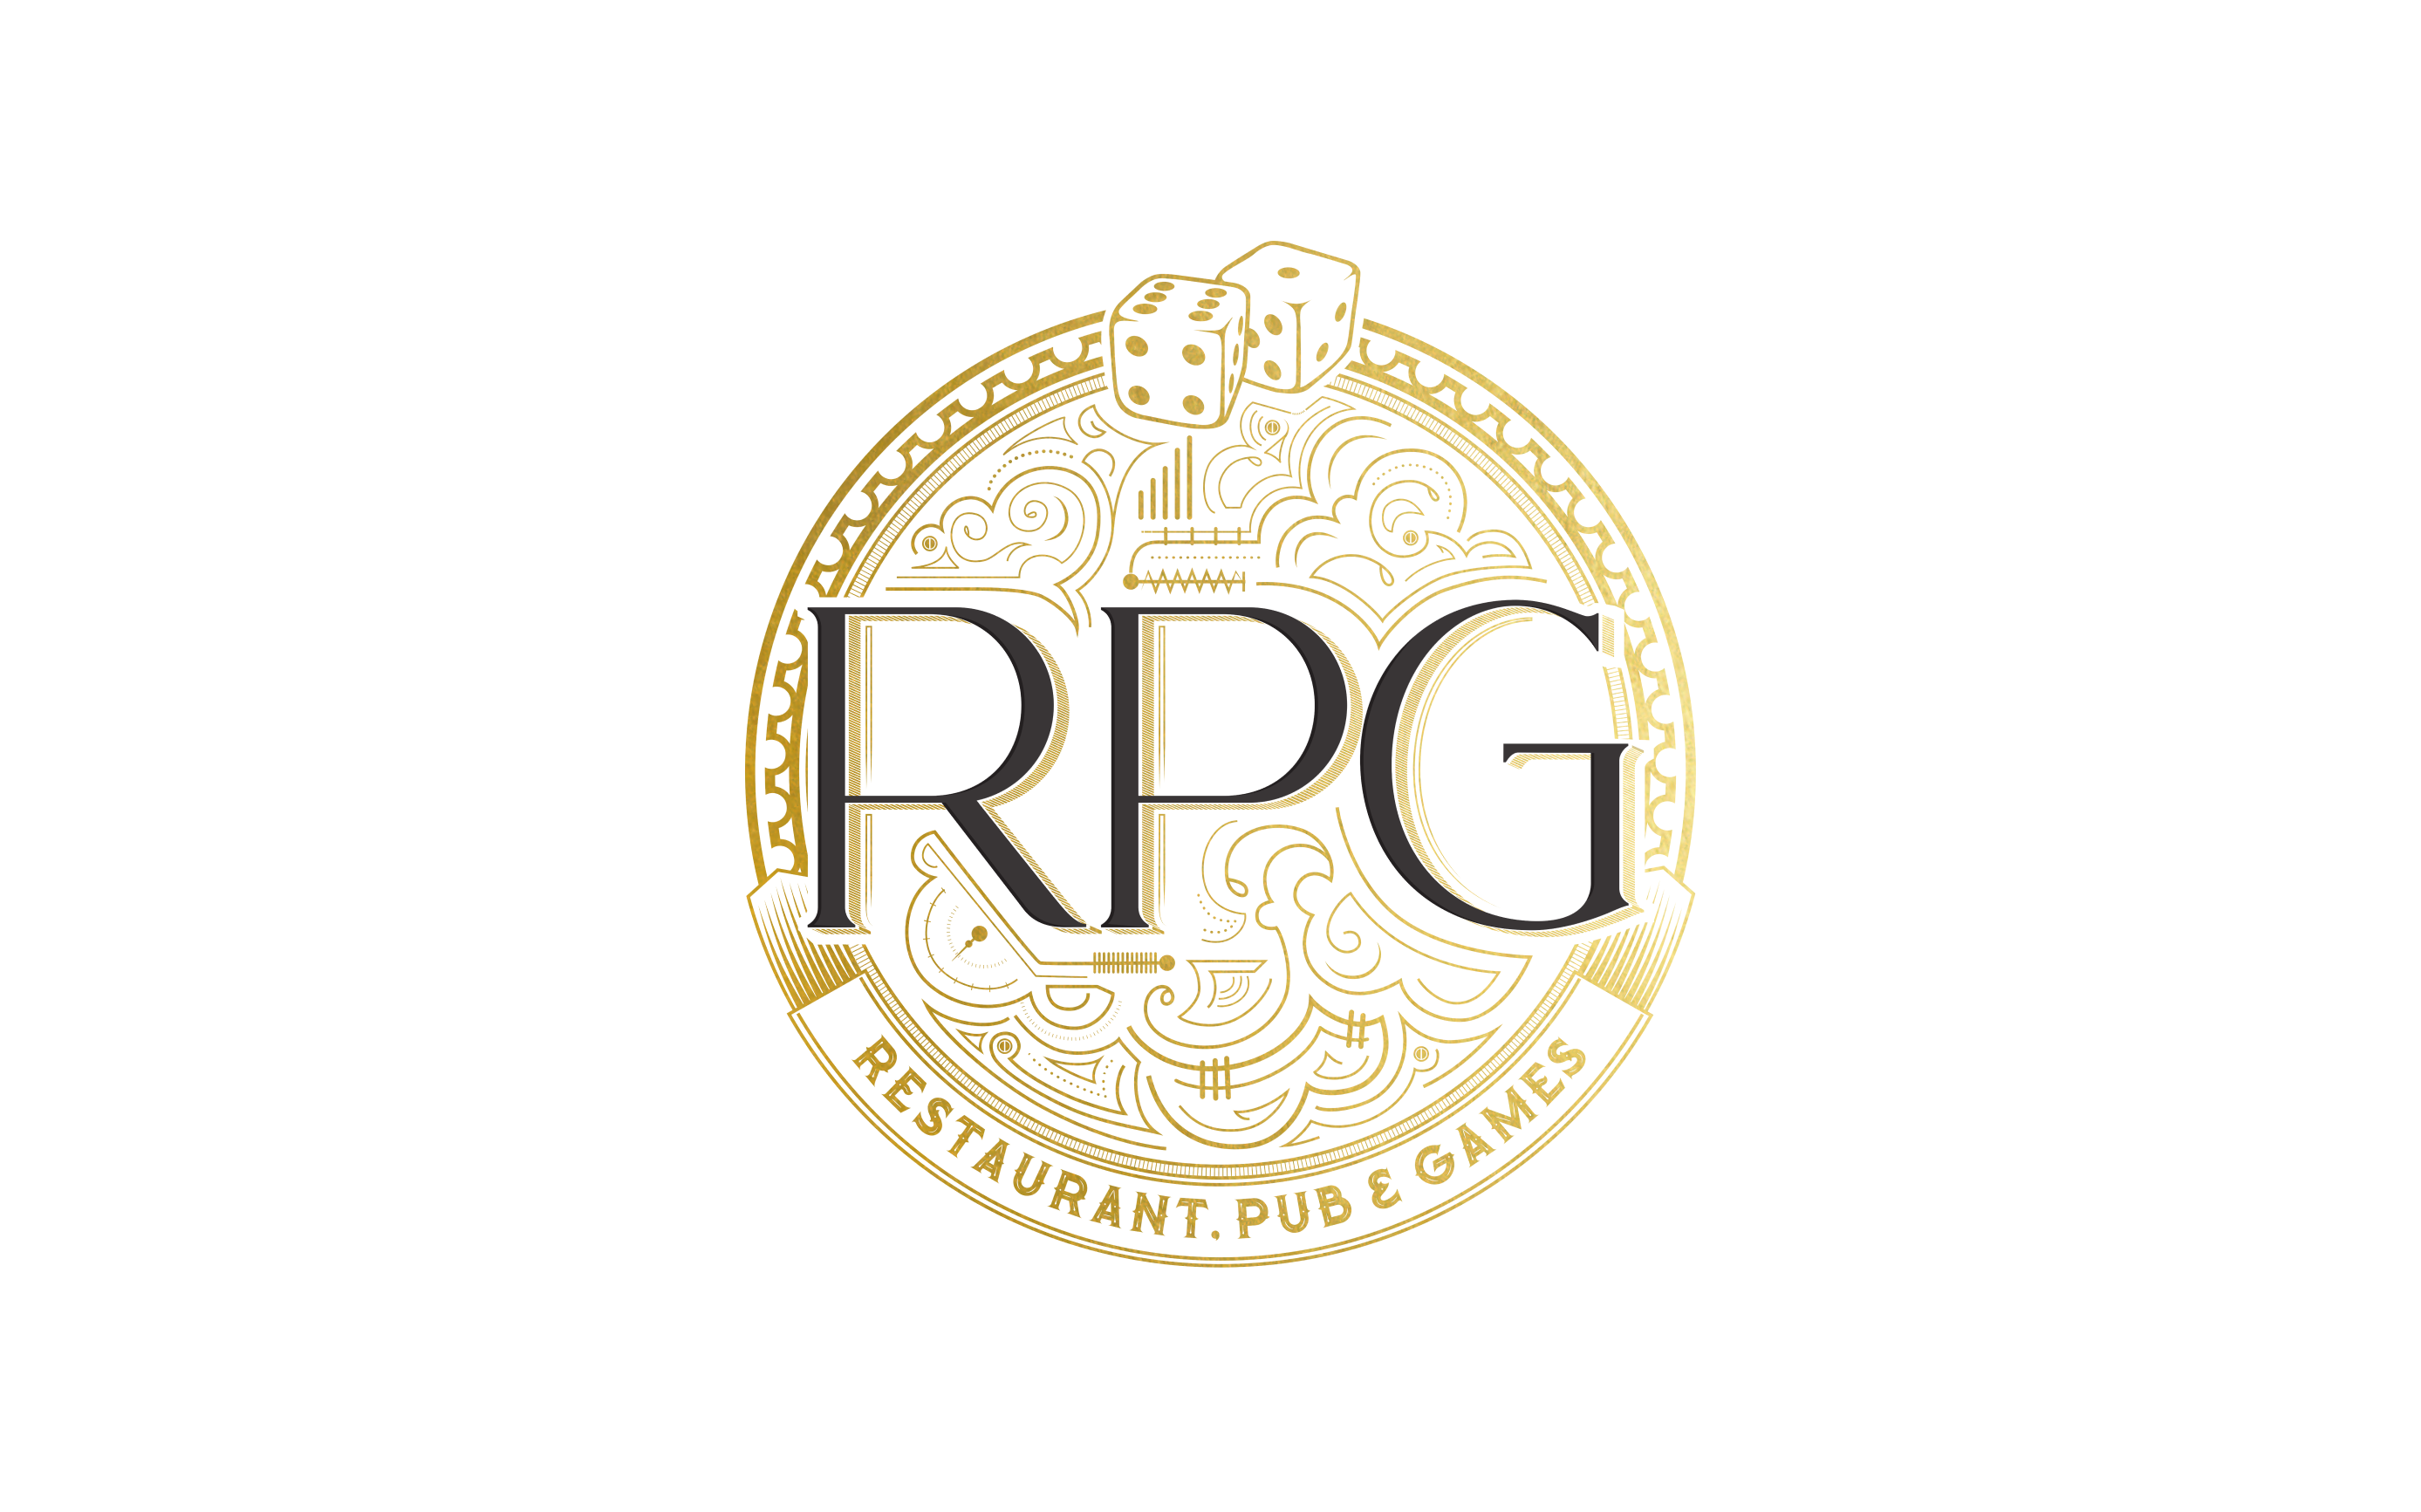 A Community for Our Community - RPG (Restaurant, Pub & Games)